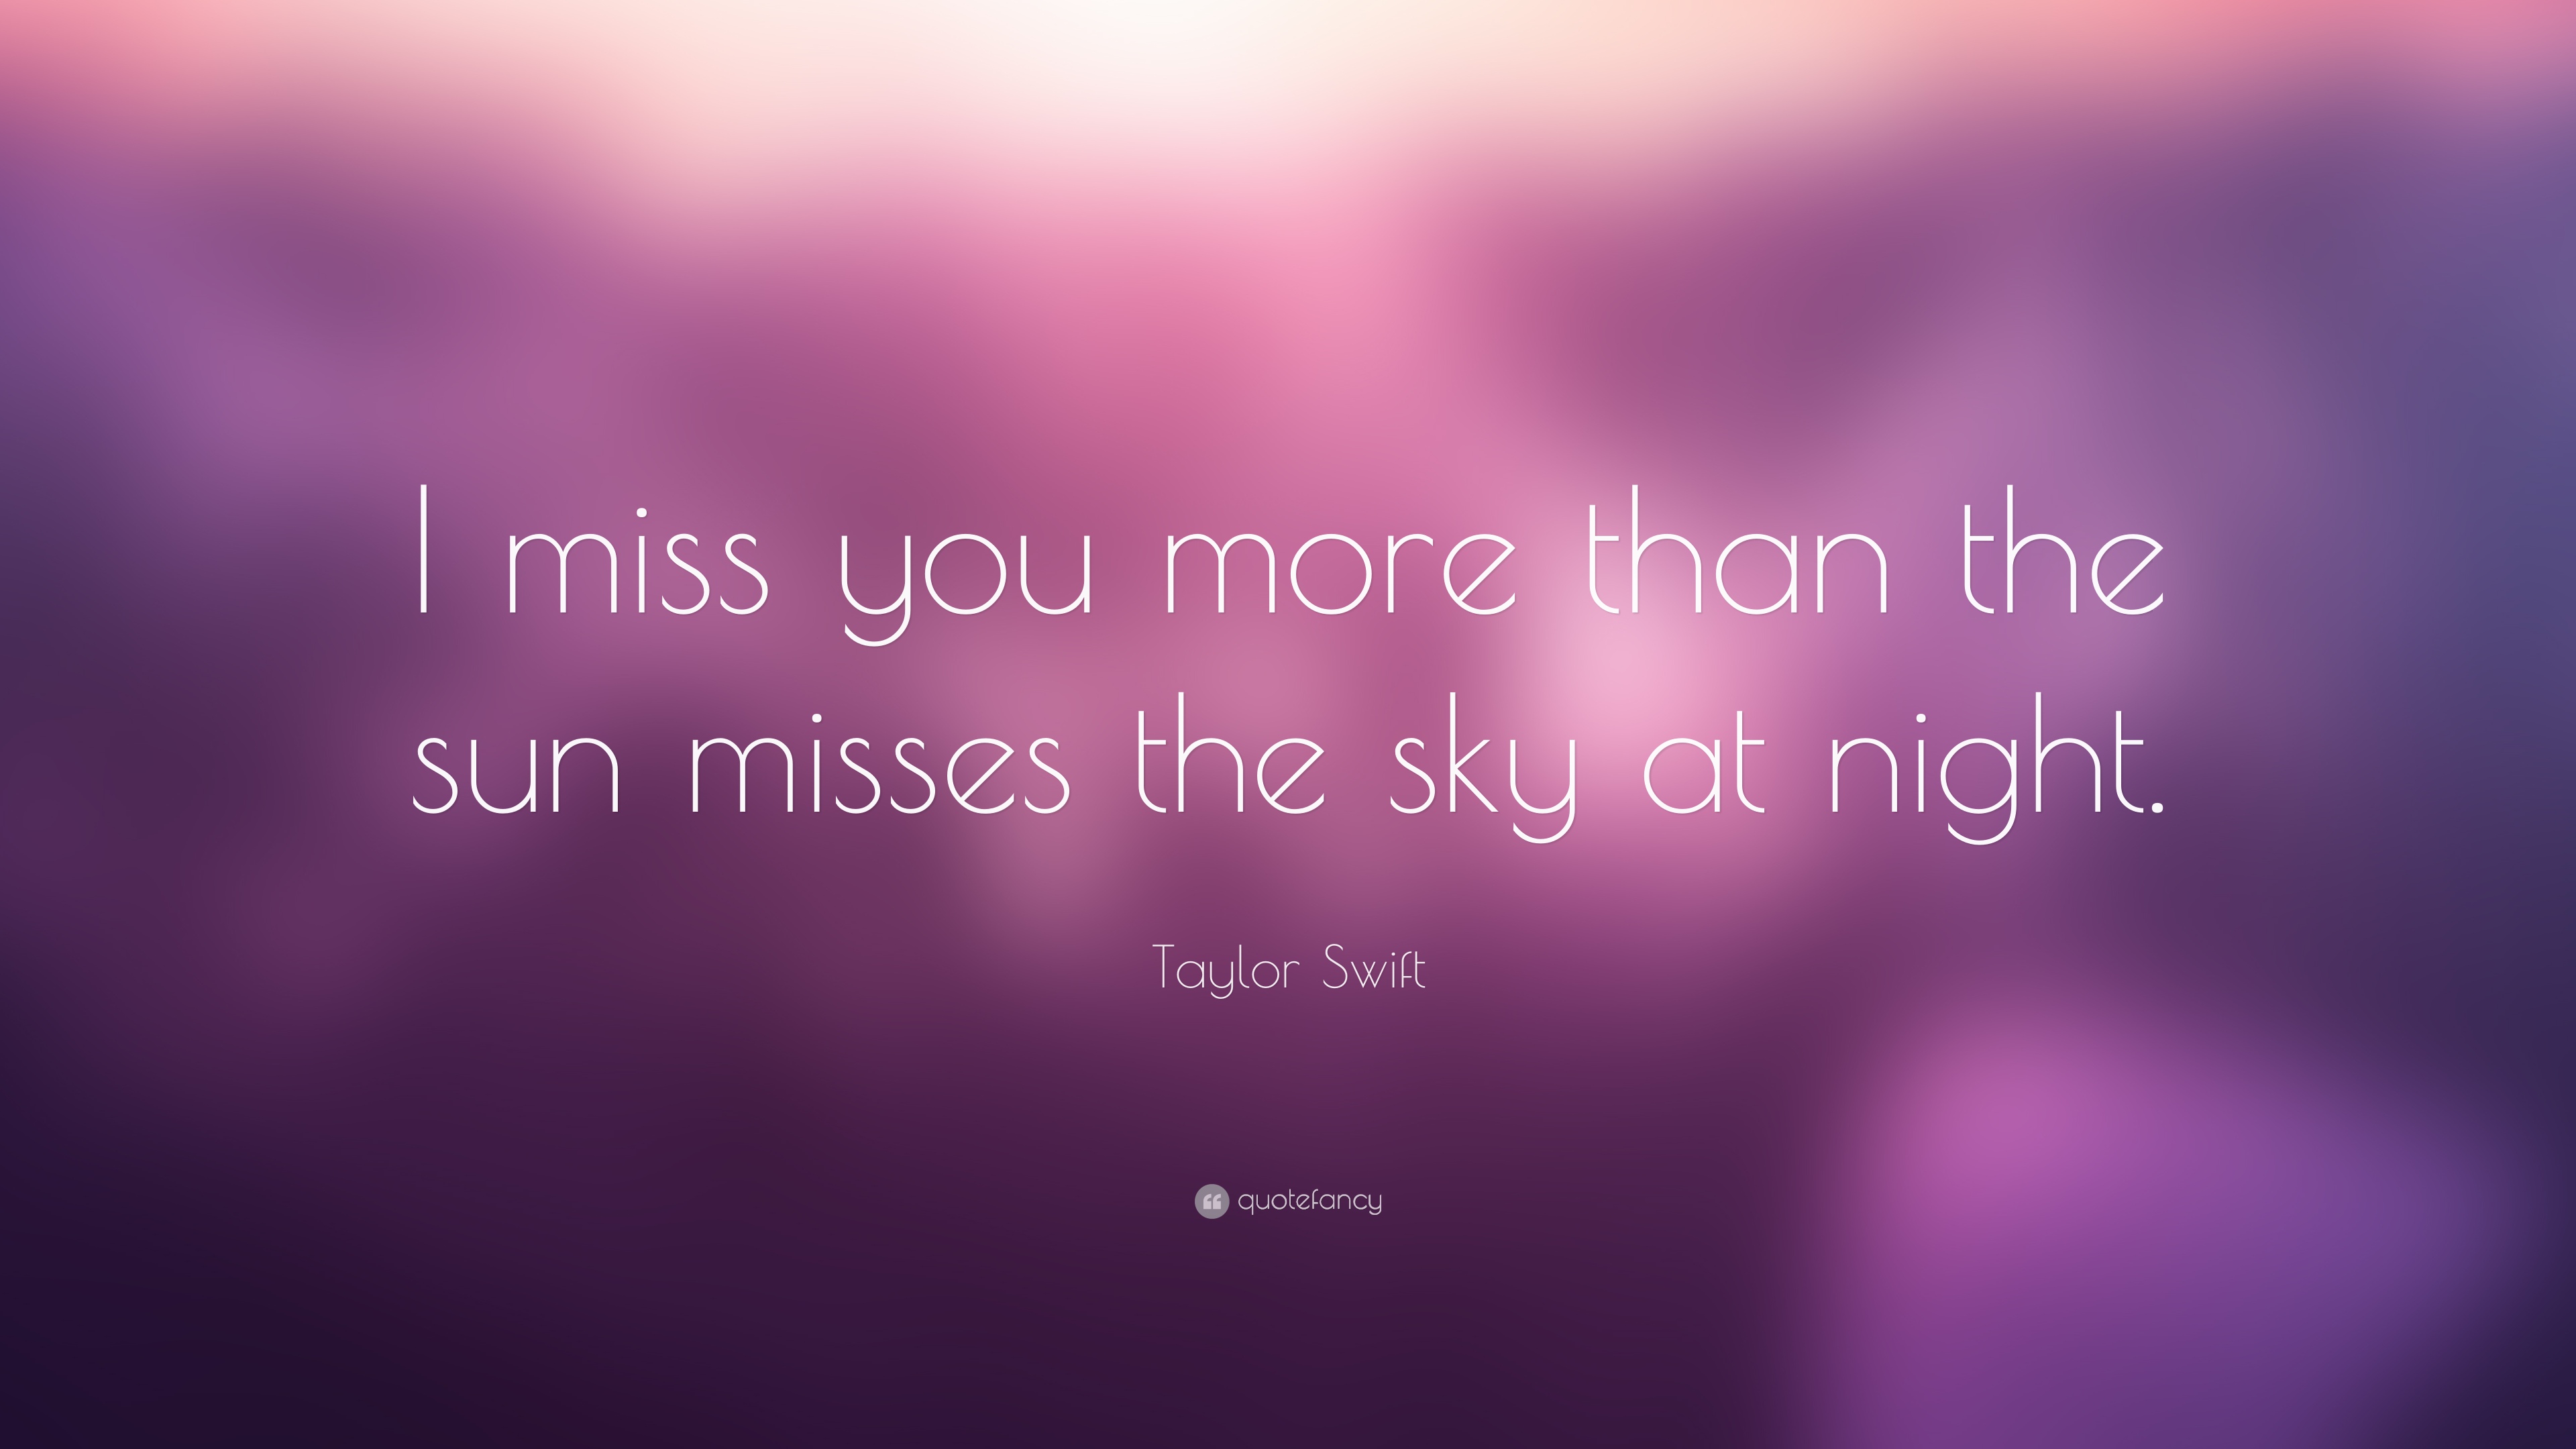 Taylor Swift Quote - Ed Sheeran Quotes Love - HD Wallpaper 